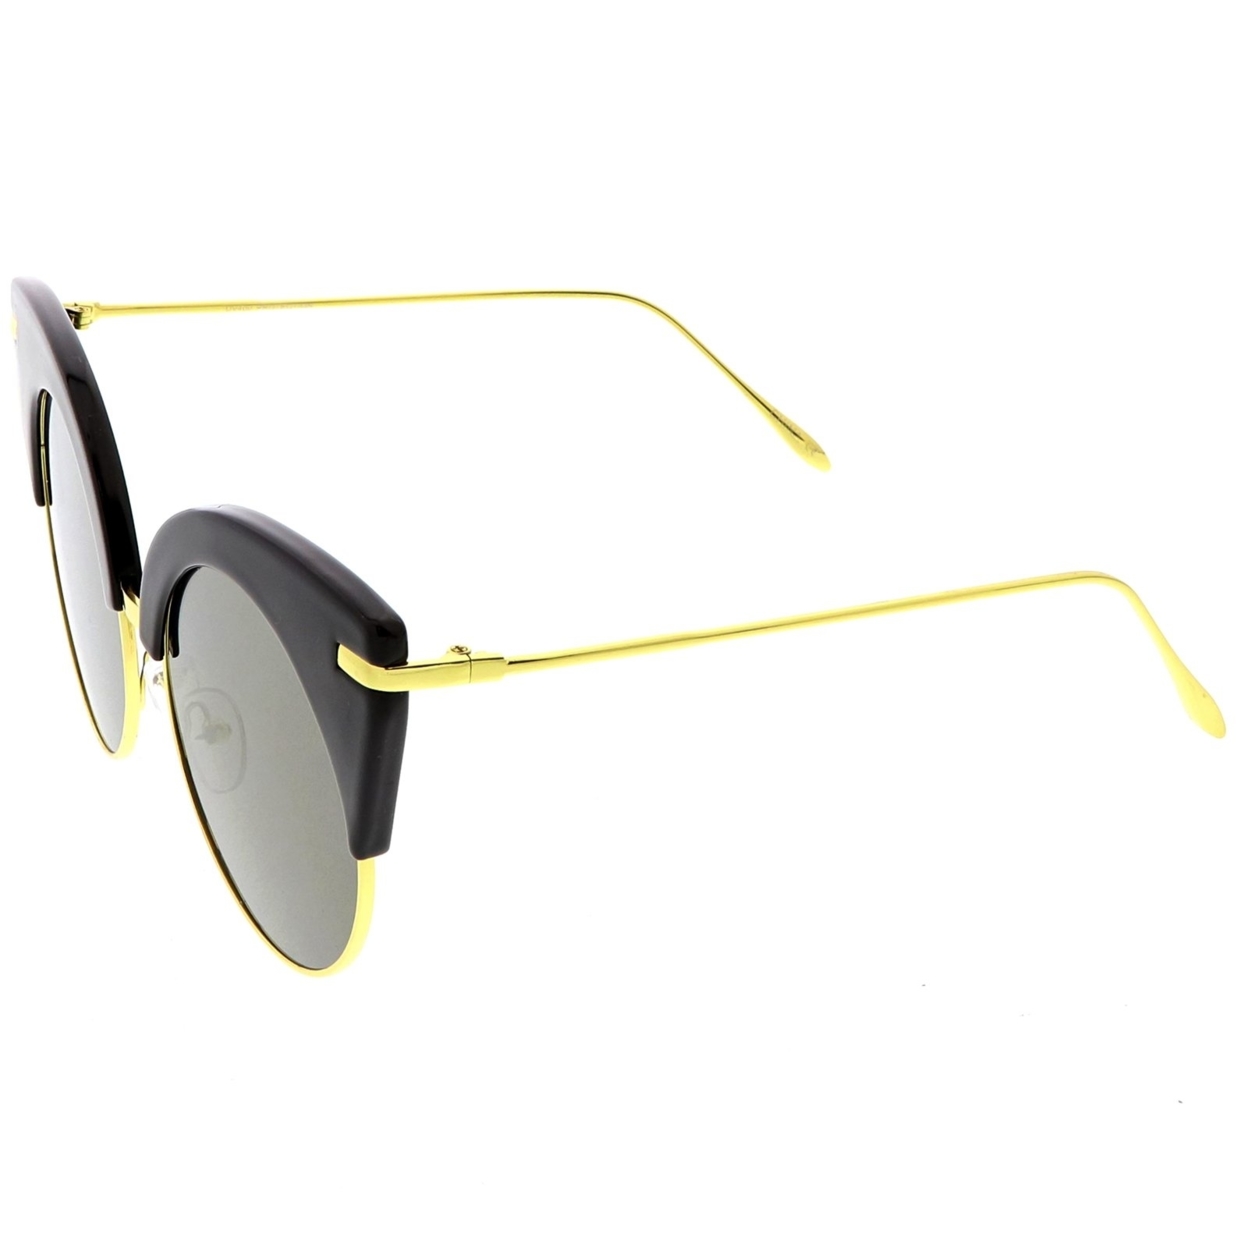 Oversize Half Frame Cat Eye Sunglasses Ultra Slim Arms Round Mirrored Flat Lens 54mm - Tortoise Gold / Magenta Mirror